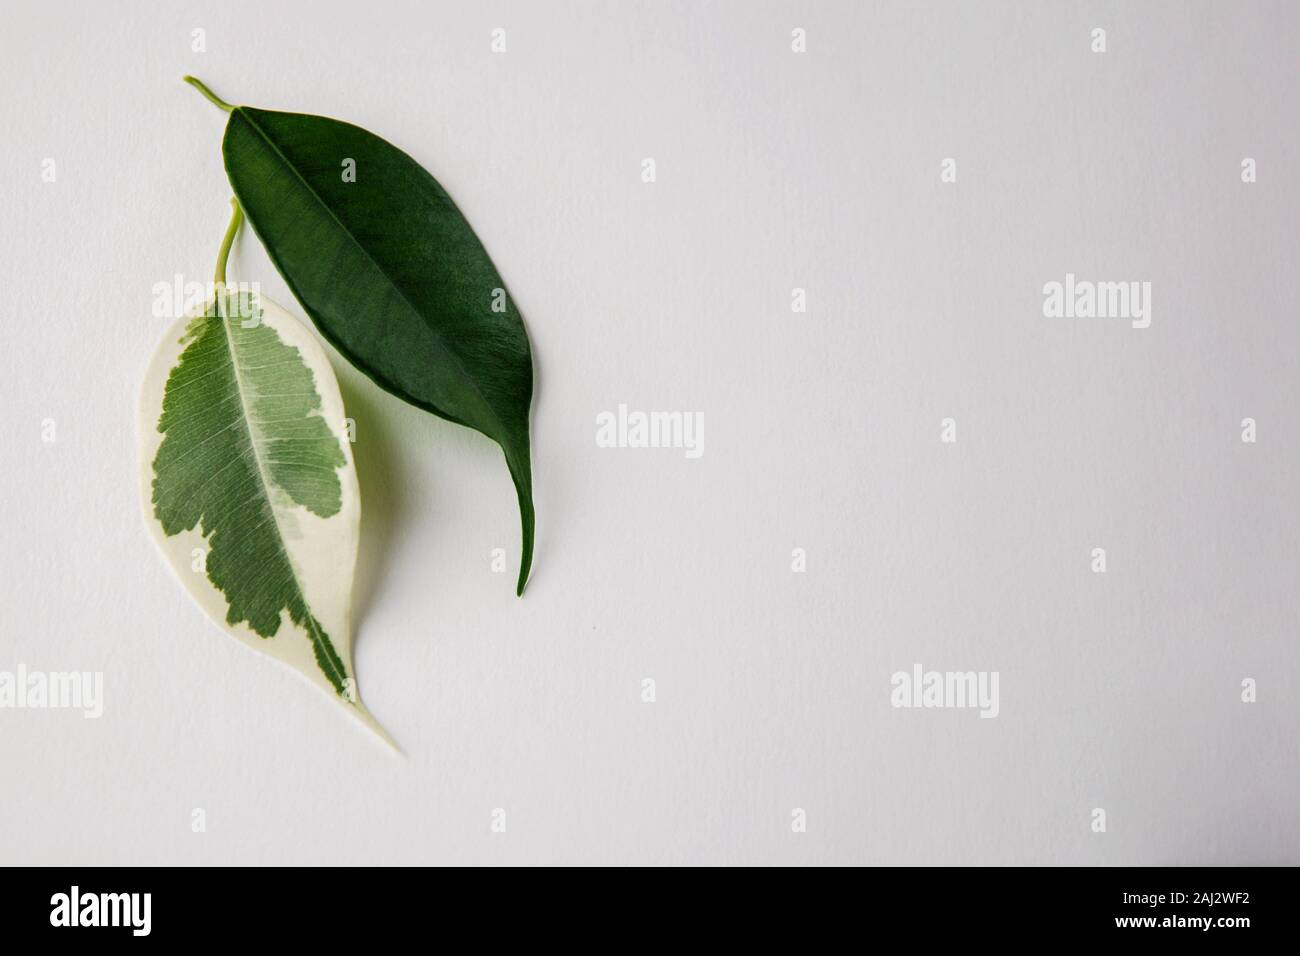 Two green leaves on white background. One leaf has white spots. Vitiligo skin problem symbol. Stock Photo